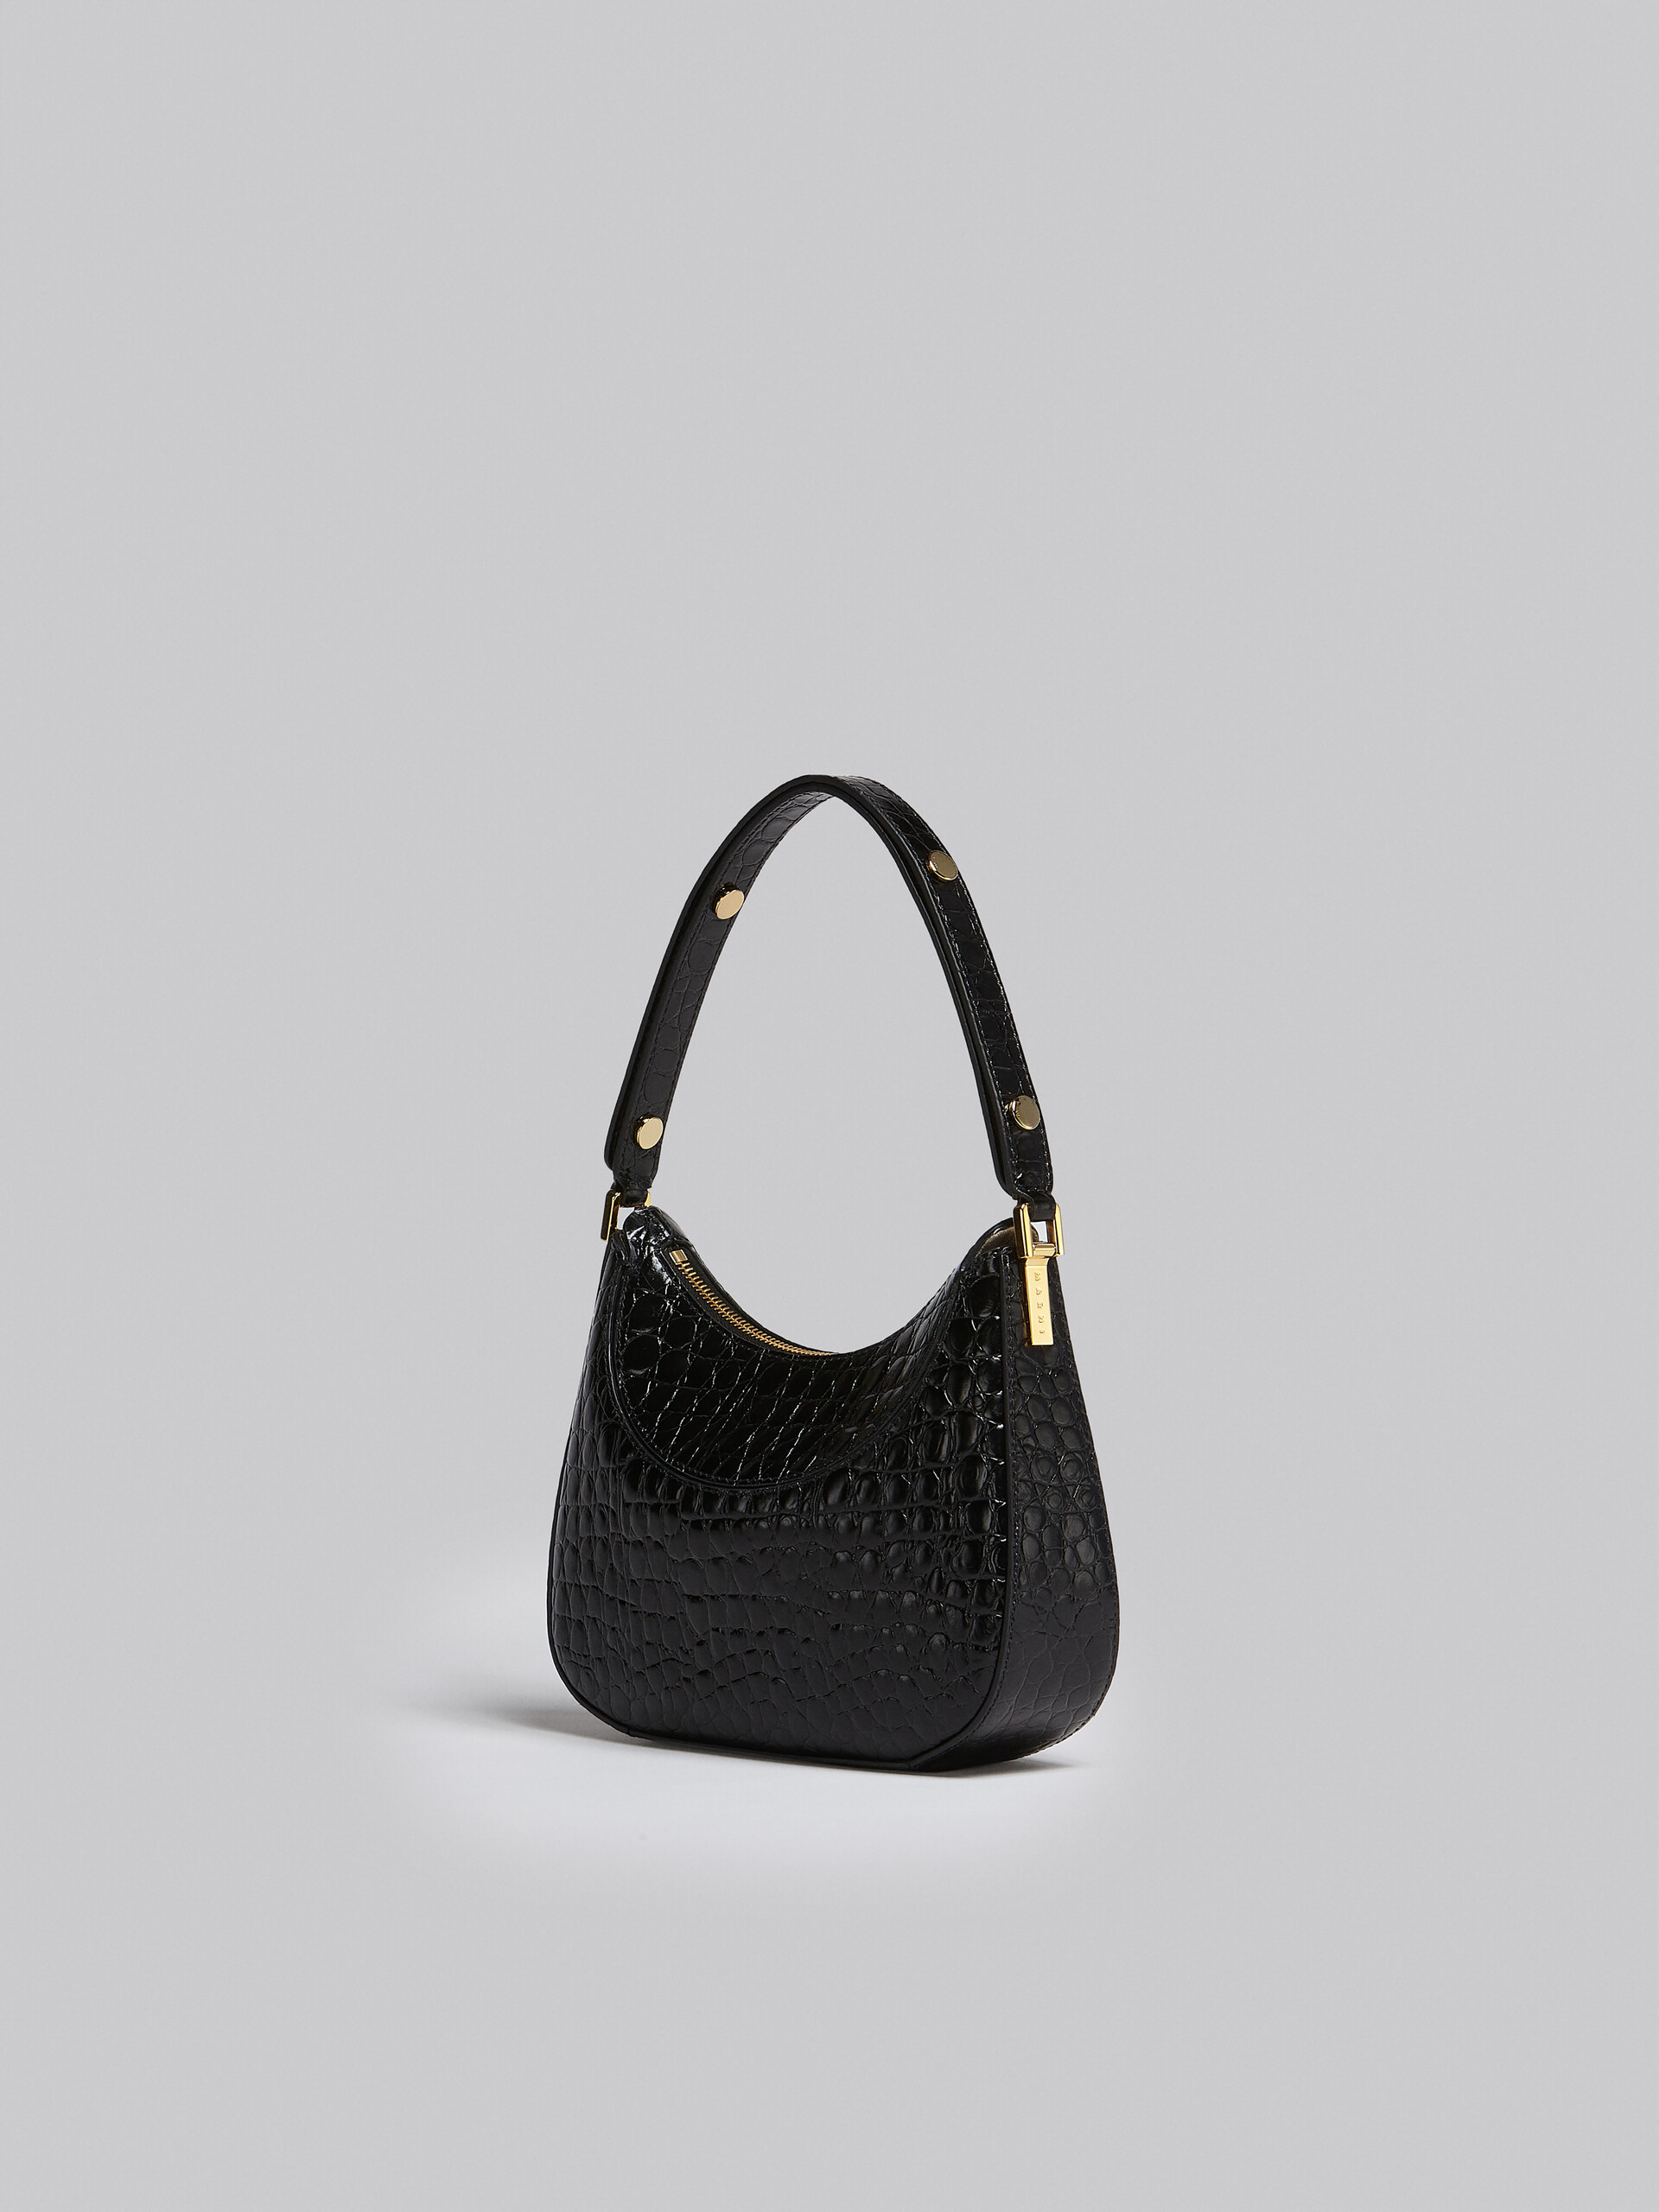 Milano Mini Bag in black croco print leather - Handbag - Image 2